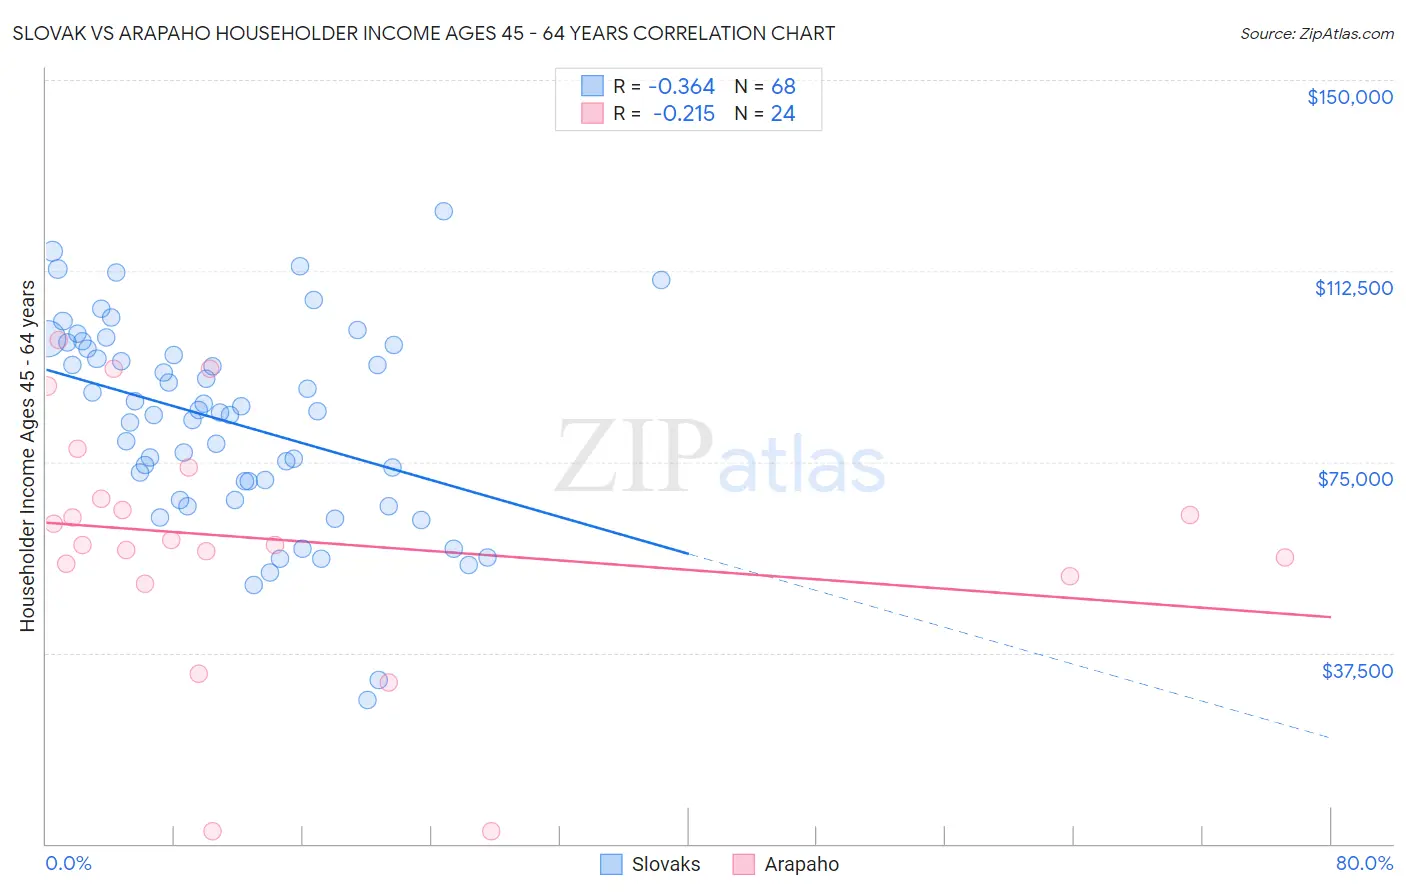 Slovak vs Arapaho Householder Income Ages 45 - 64 years